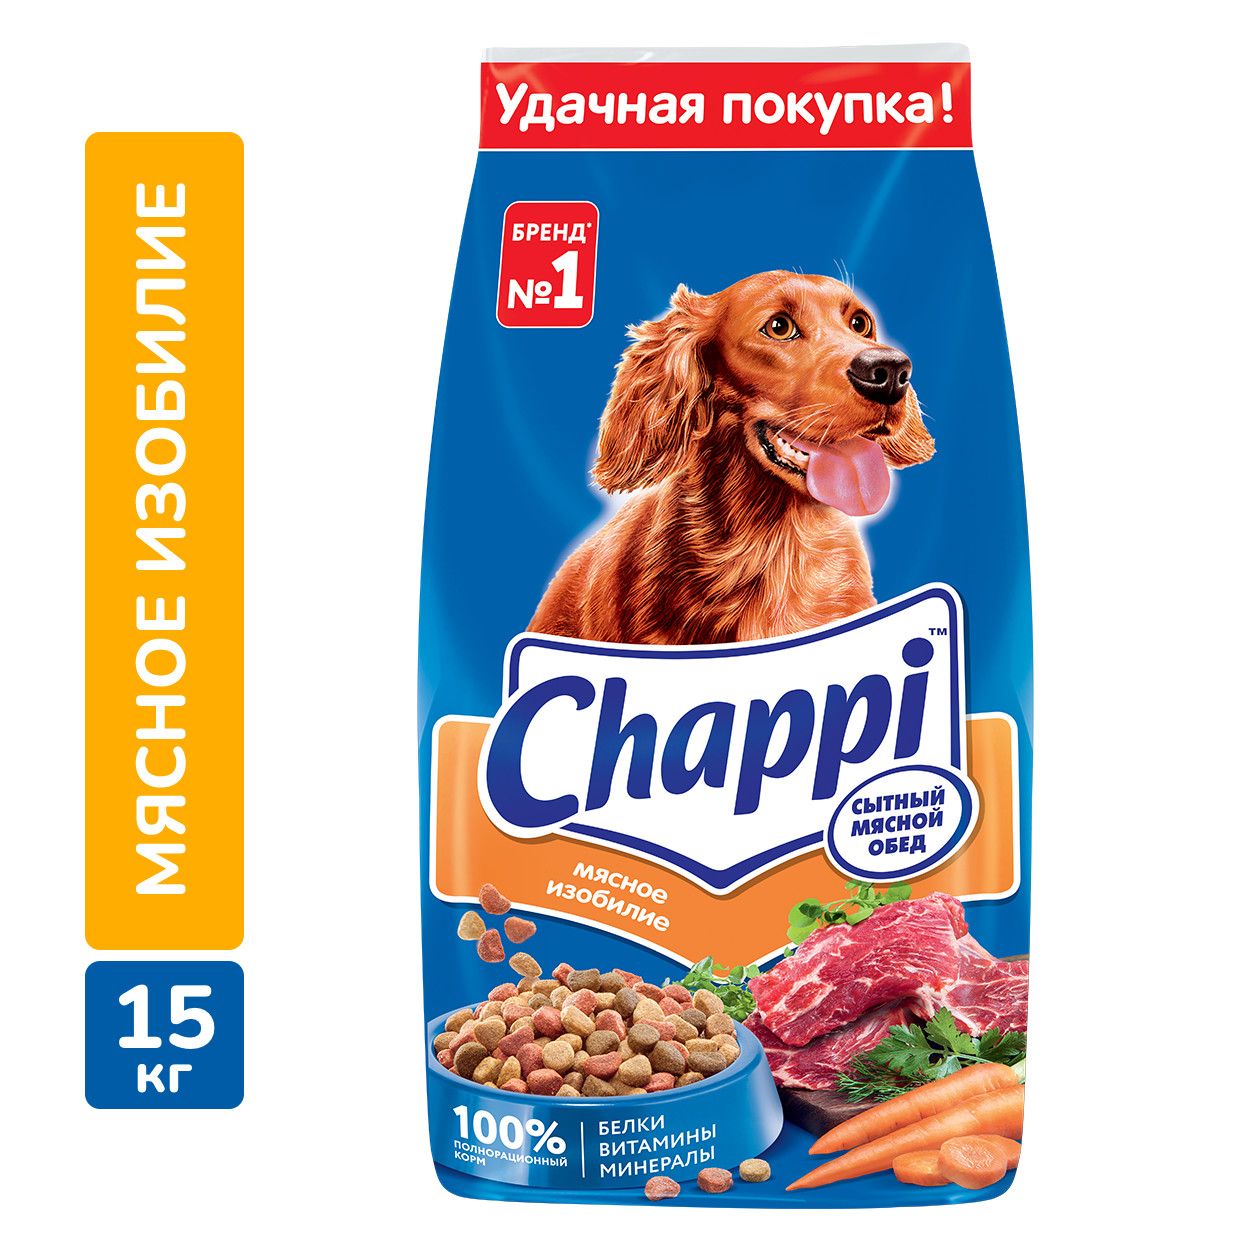 Корм для собак чаппи дешево. Чаппи корм для собак 15кг. Корм сухой для собак Chappi сытный мясной обед мясное изобилие 15 кг. Сухой корм для собак Chappi говядина по-домашнему 15 кг. Chappi мясное изобилие (15 кг).